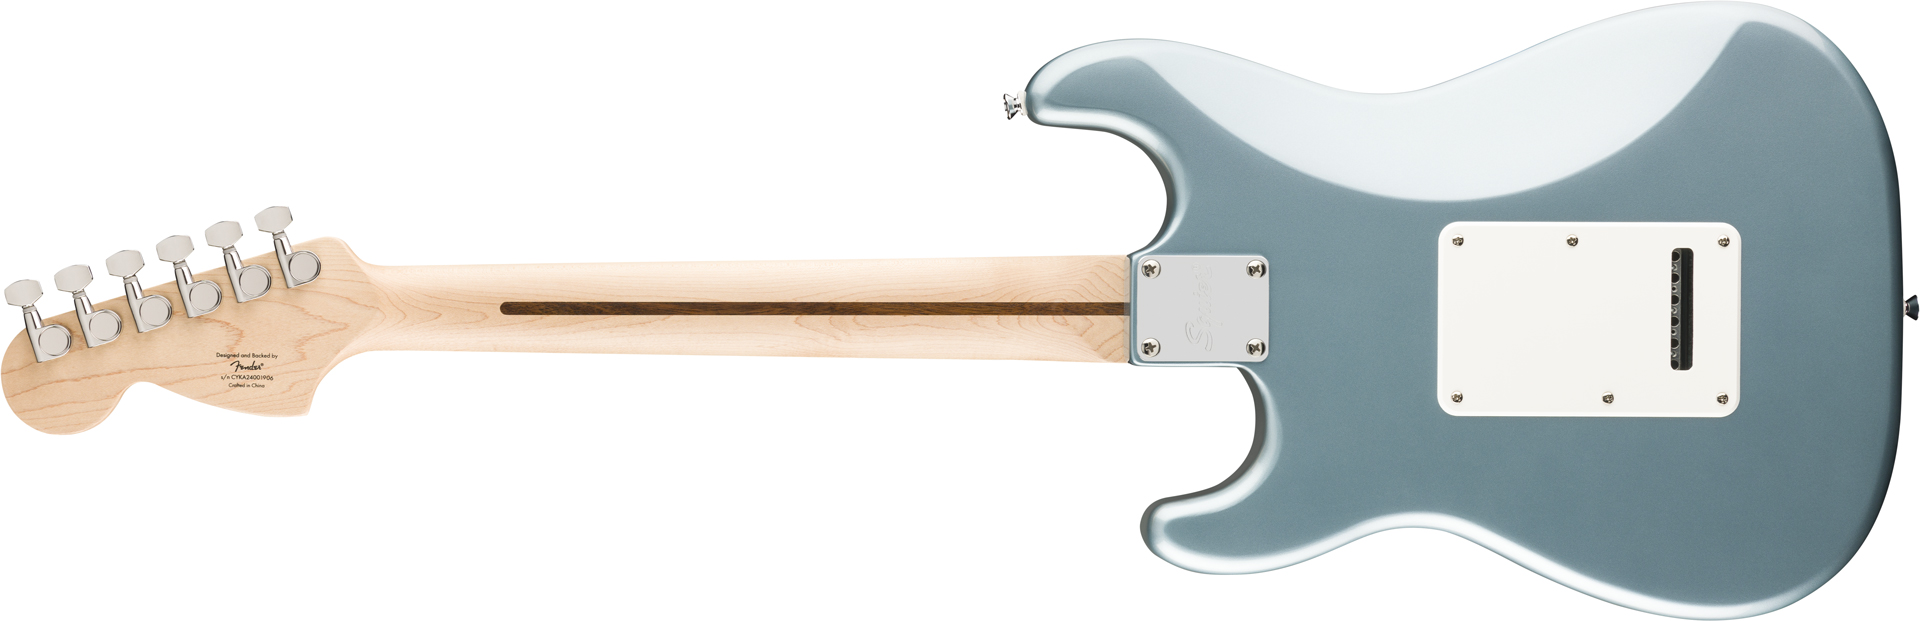 Fender Squier Affinity Stratocaster Junior HSS rear